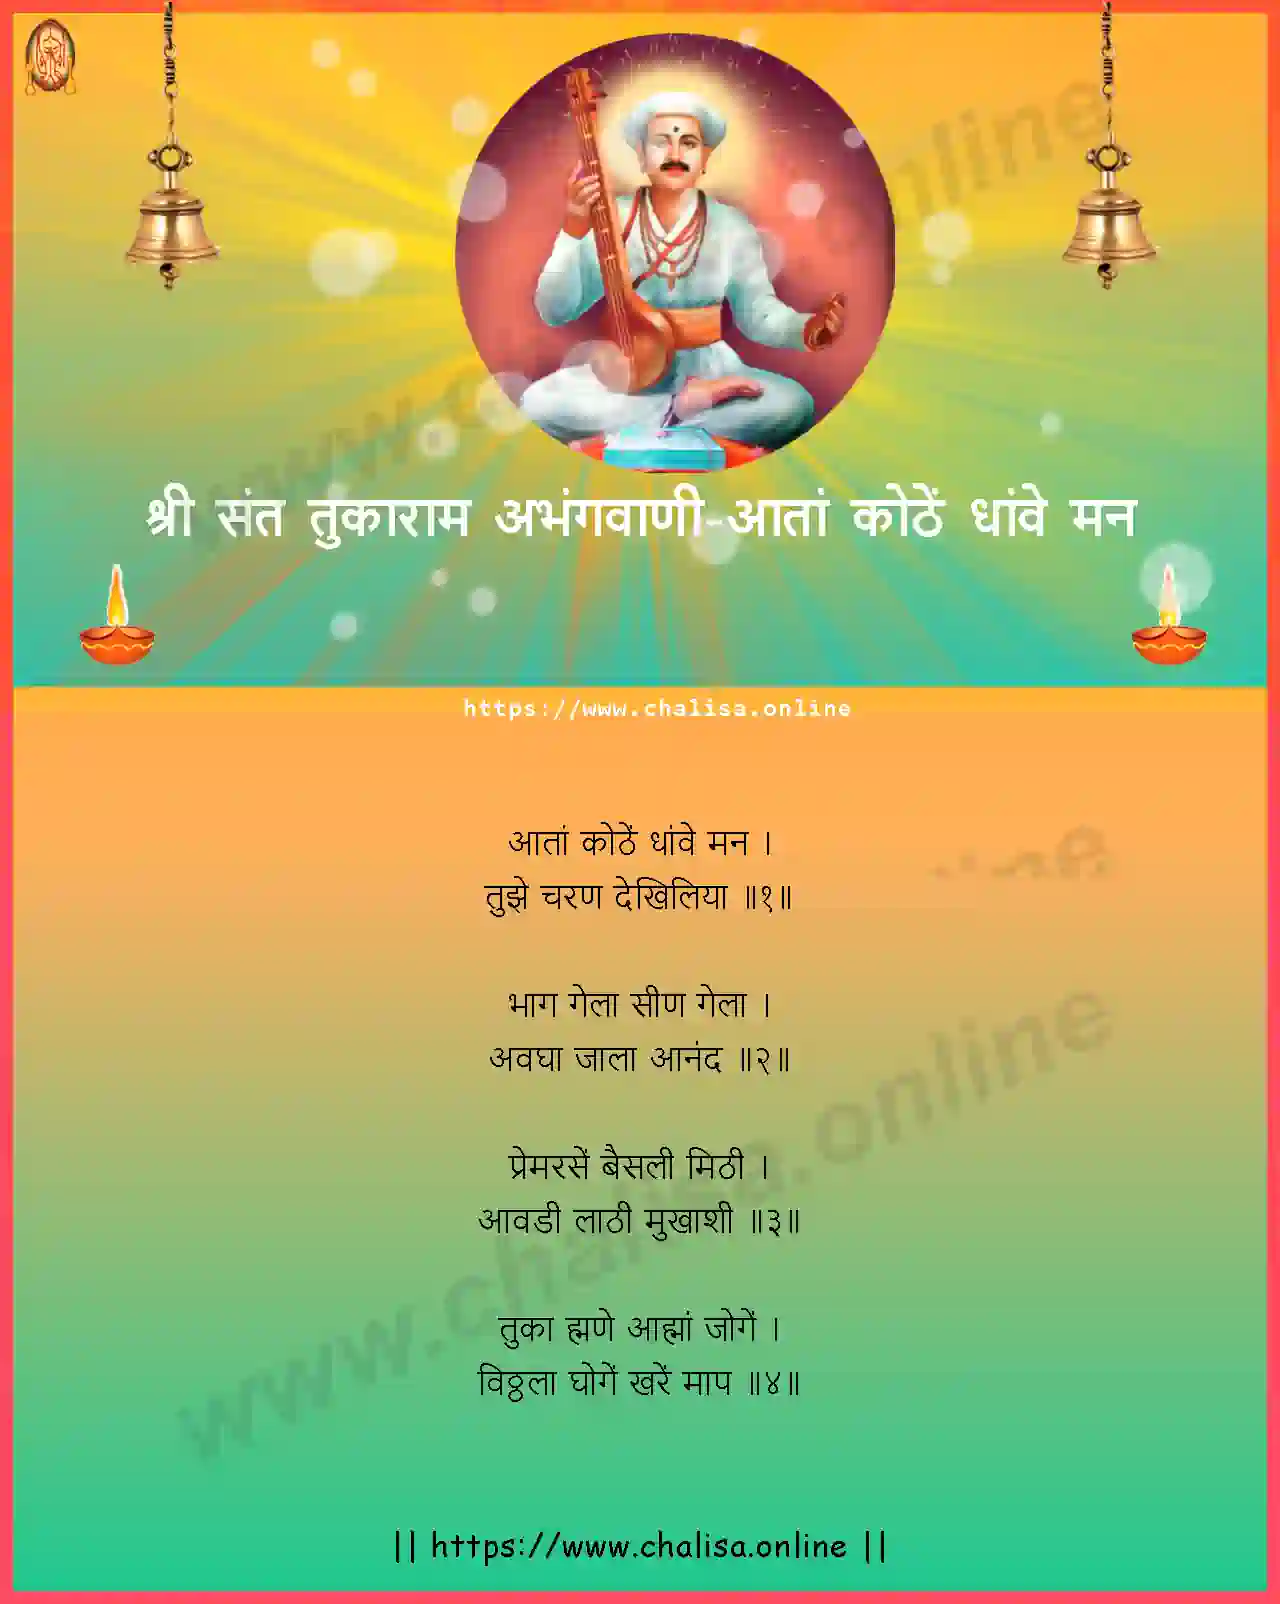 aata-kothe-dhave-man-shri-sant-tukaram-abhang-marathi-lyrics-download